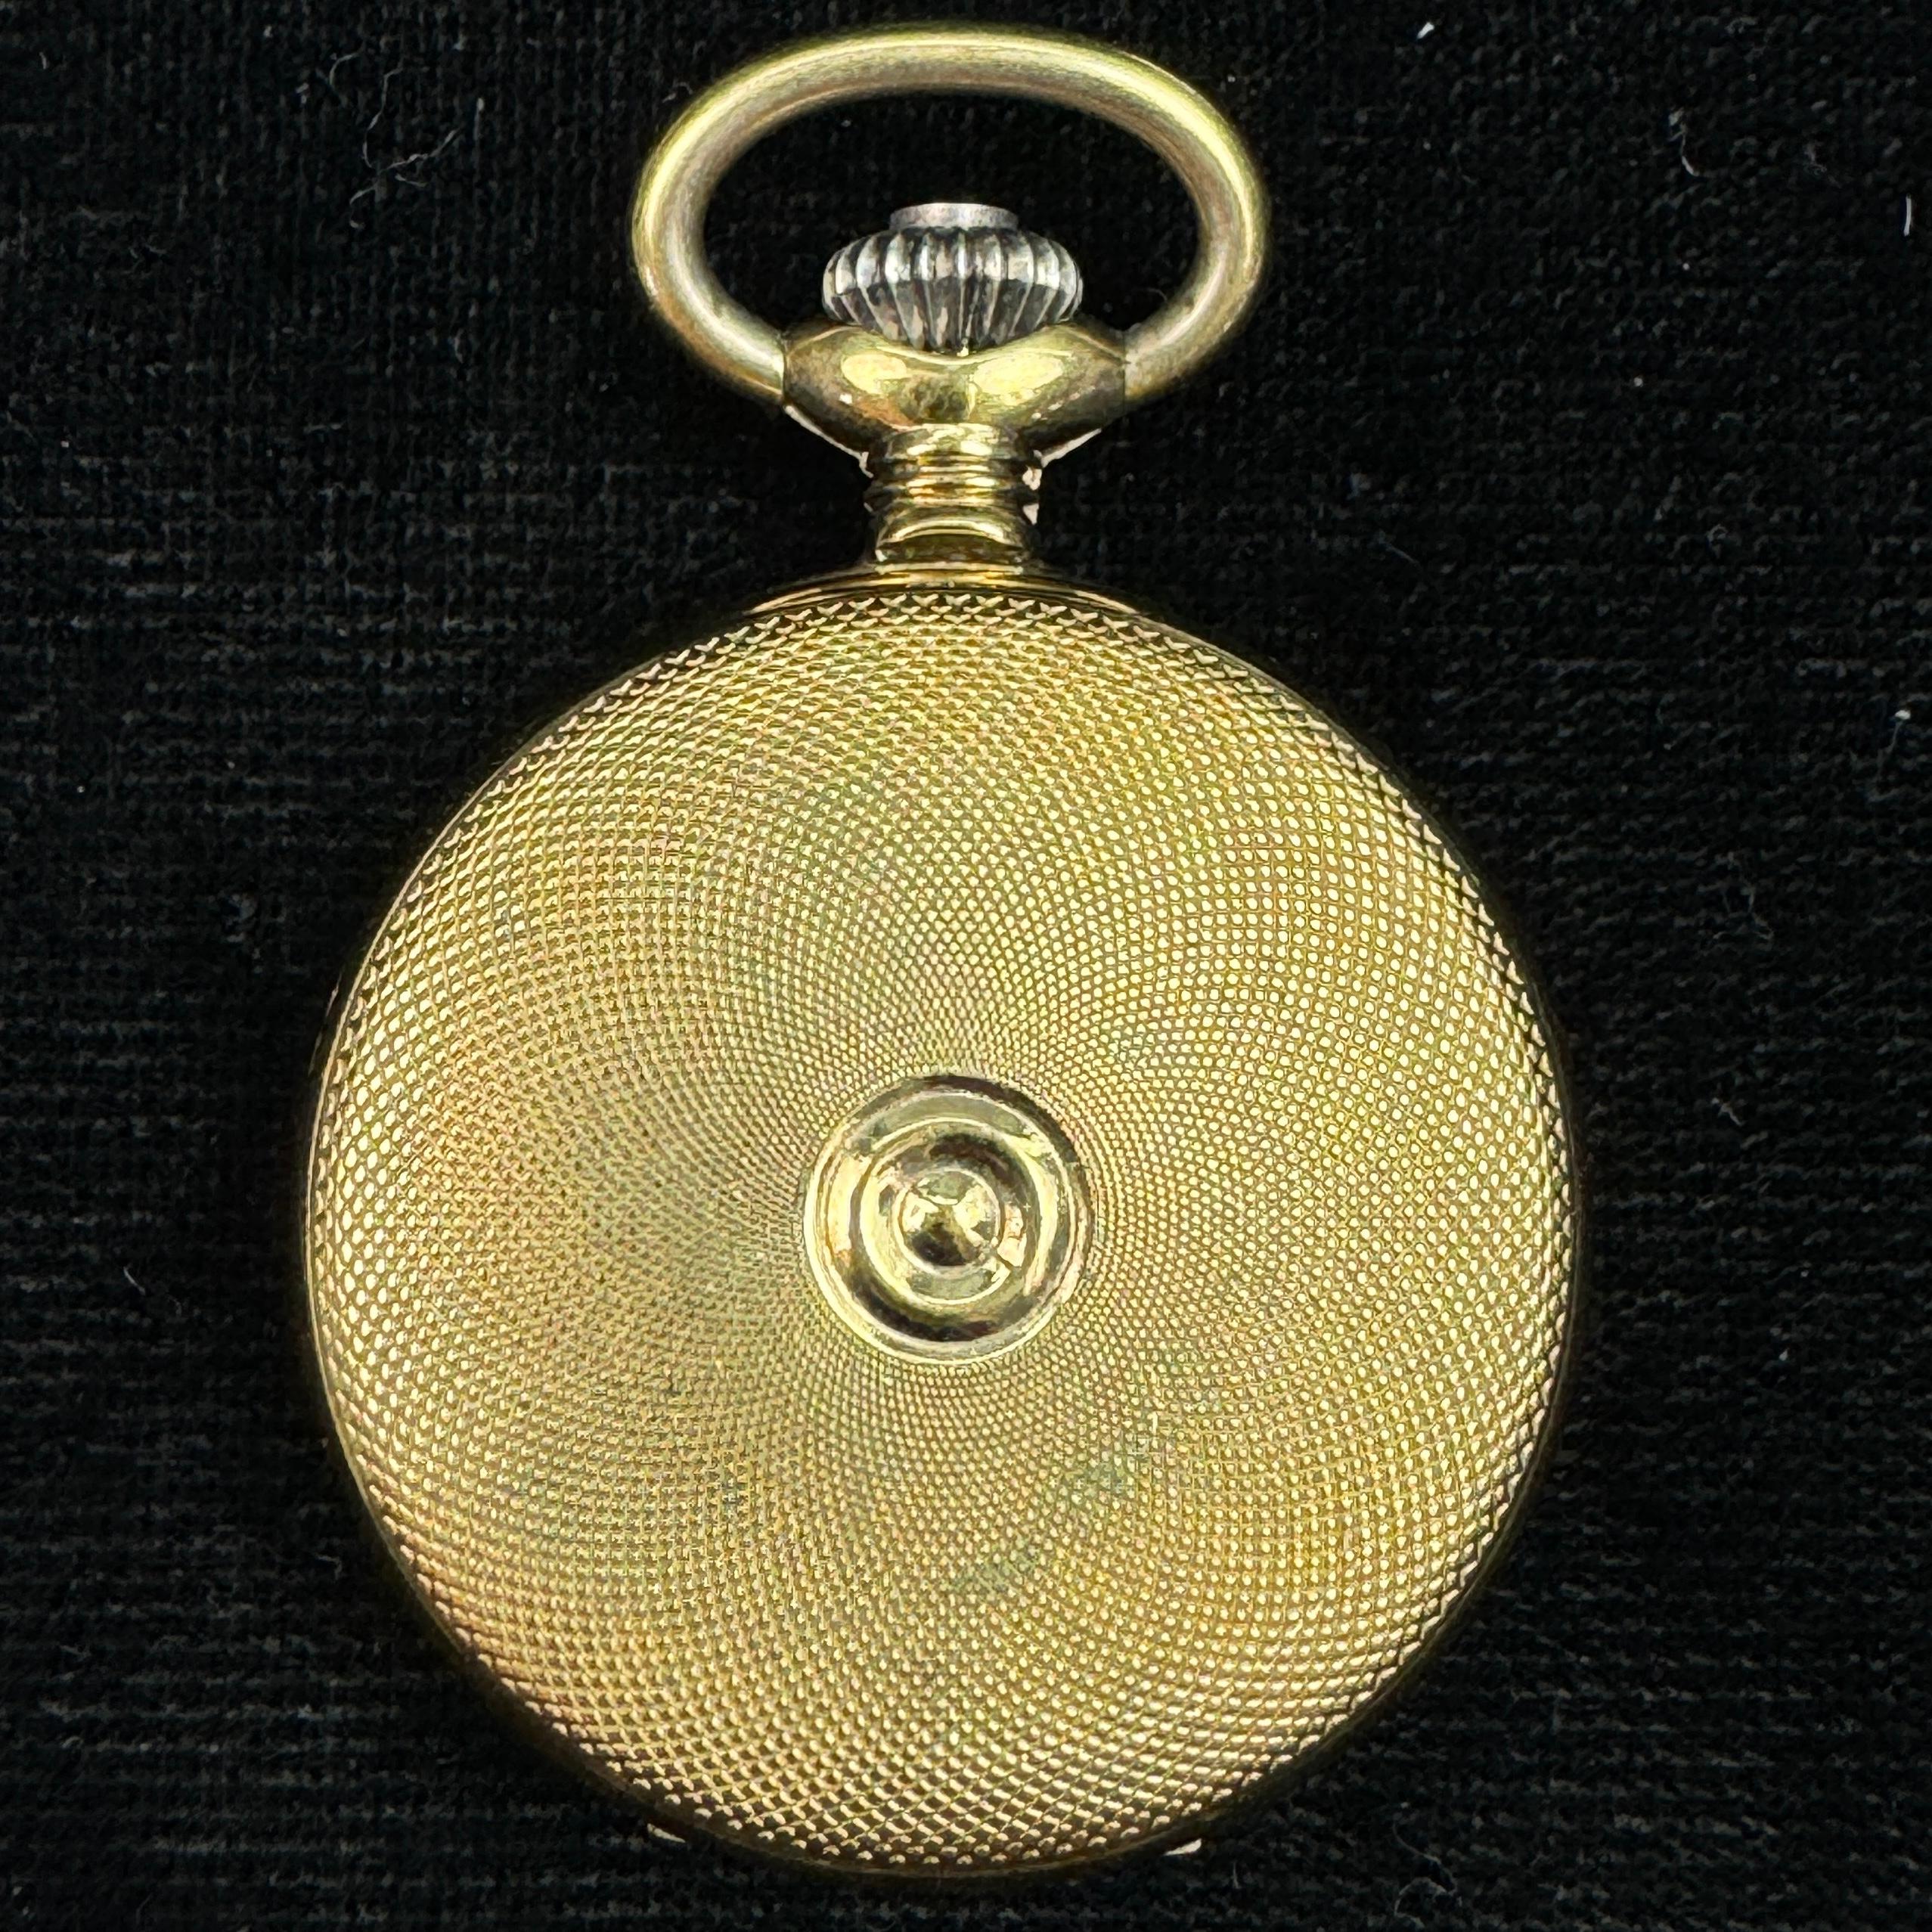 Circa 1950 17-jewel Swiss Montique covered pocket watch